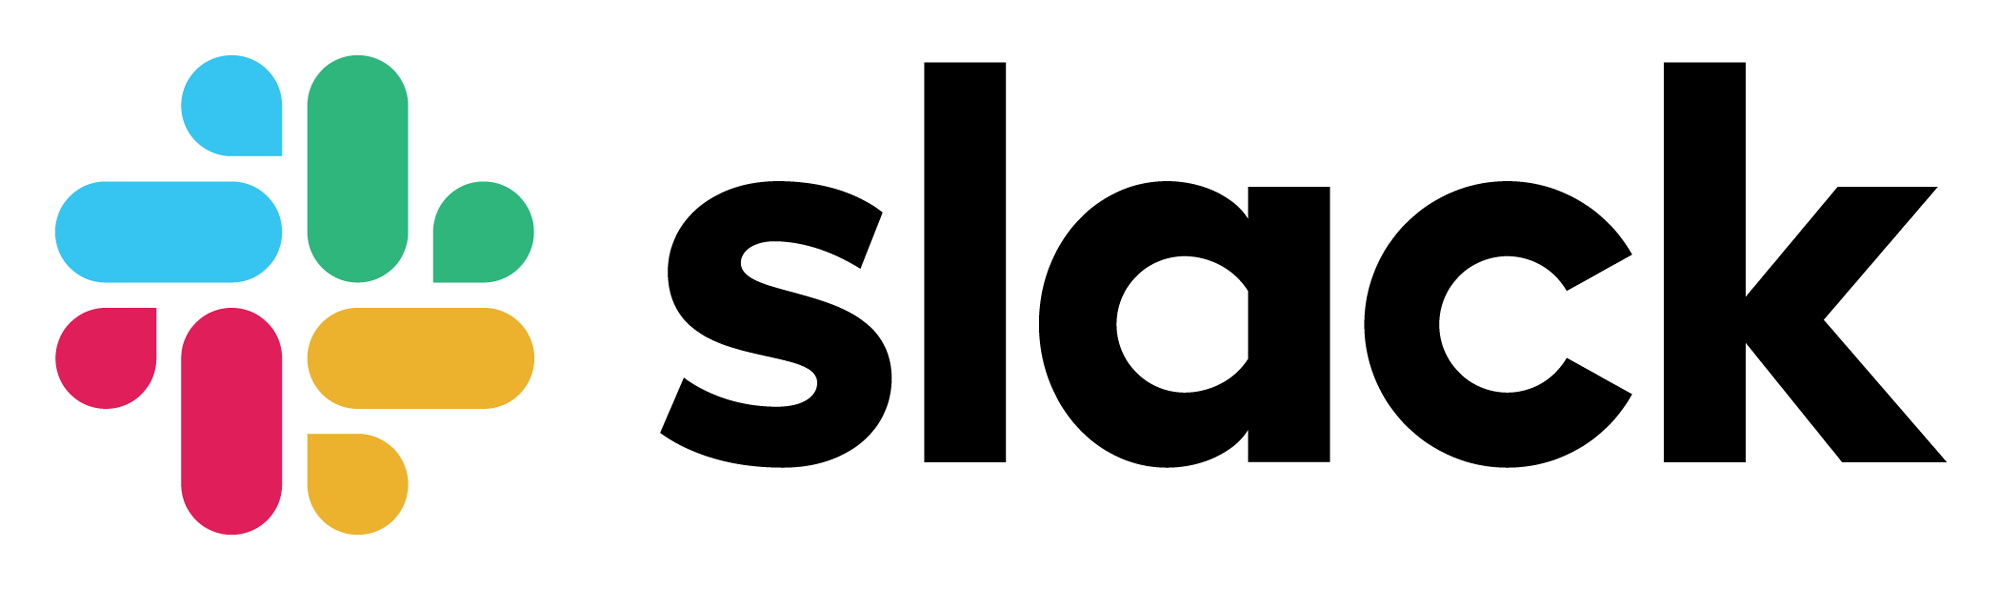 Slack Brand Logo - Brand New: New Logo And Identity For Slack By Pentagram And In House